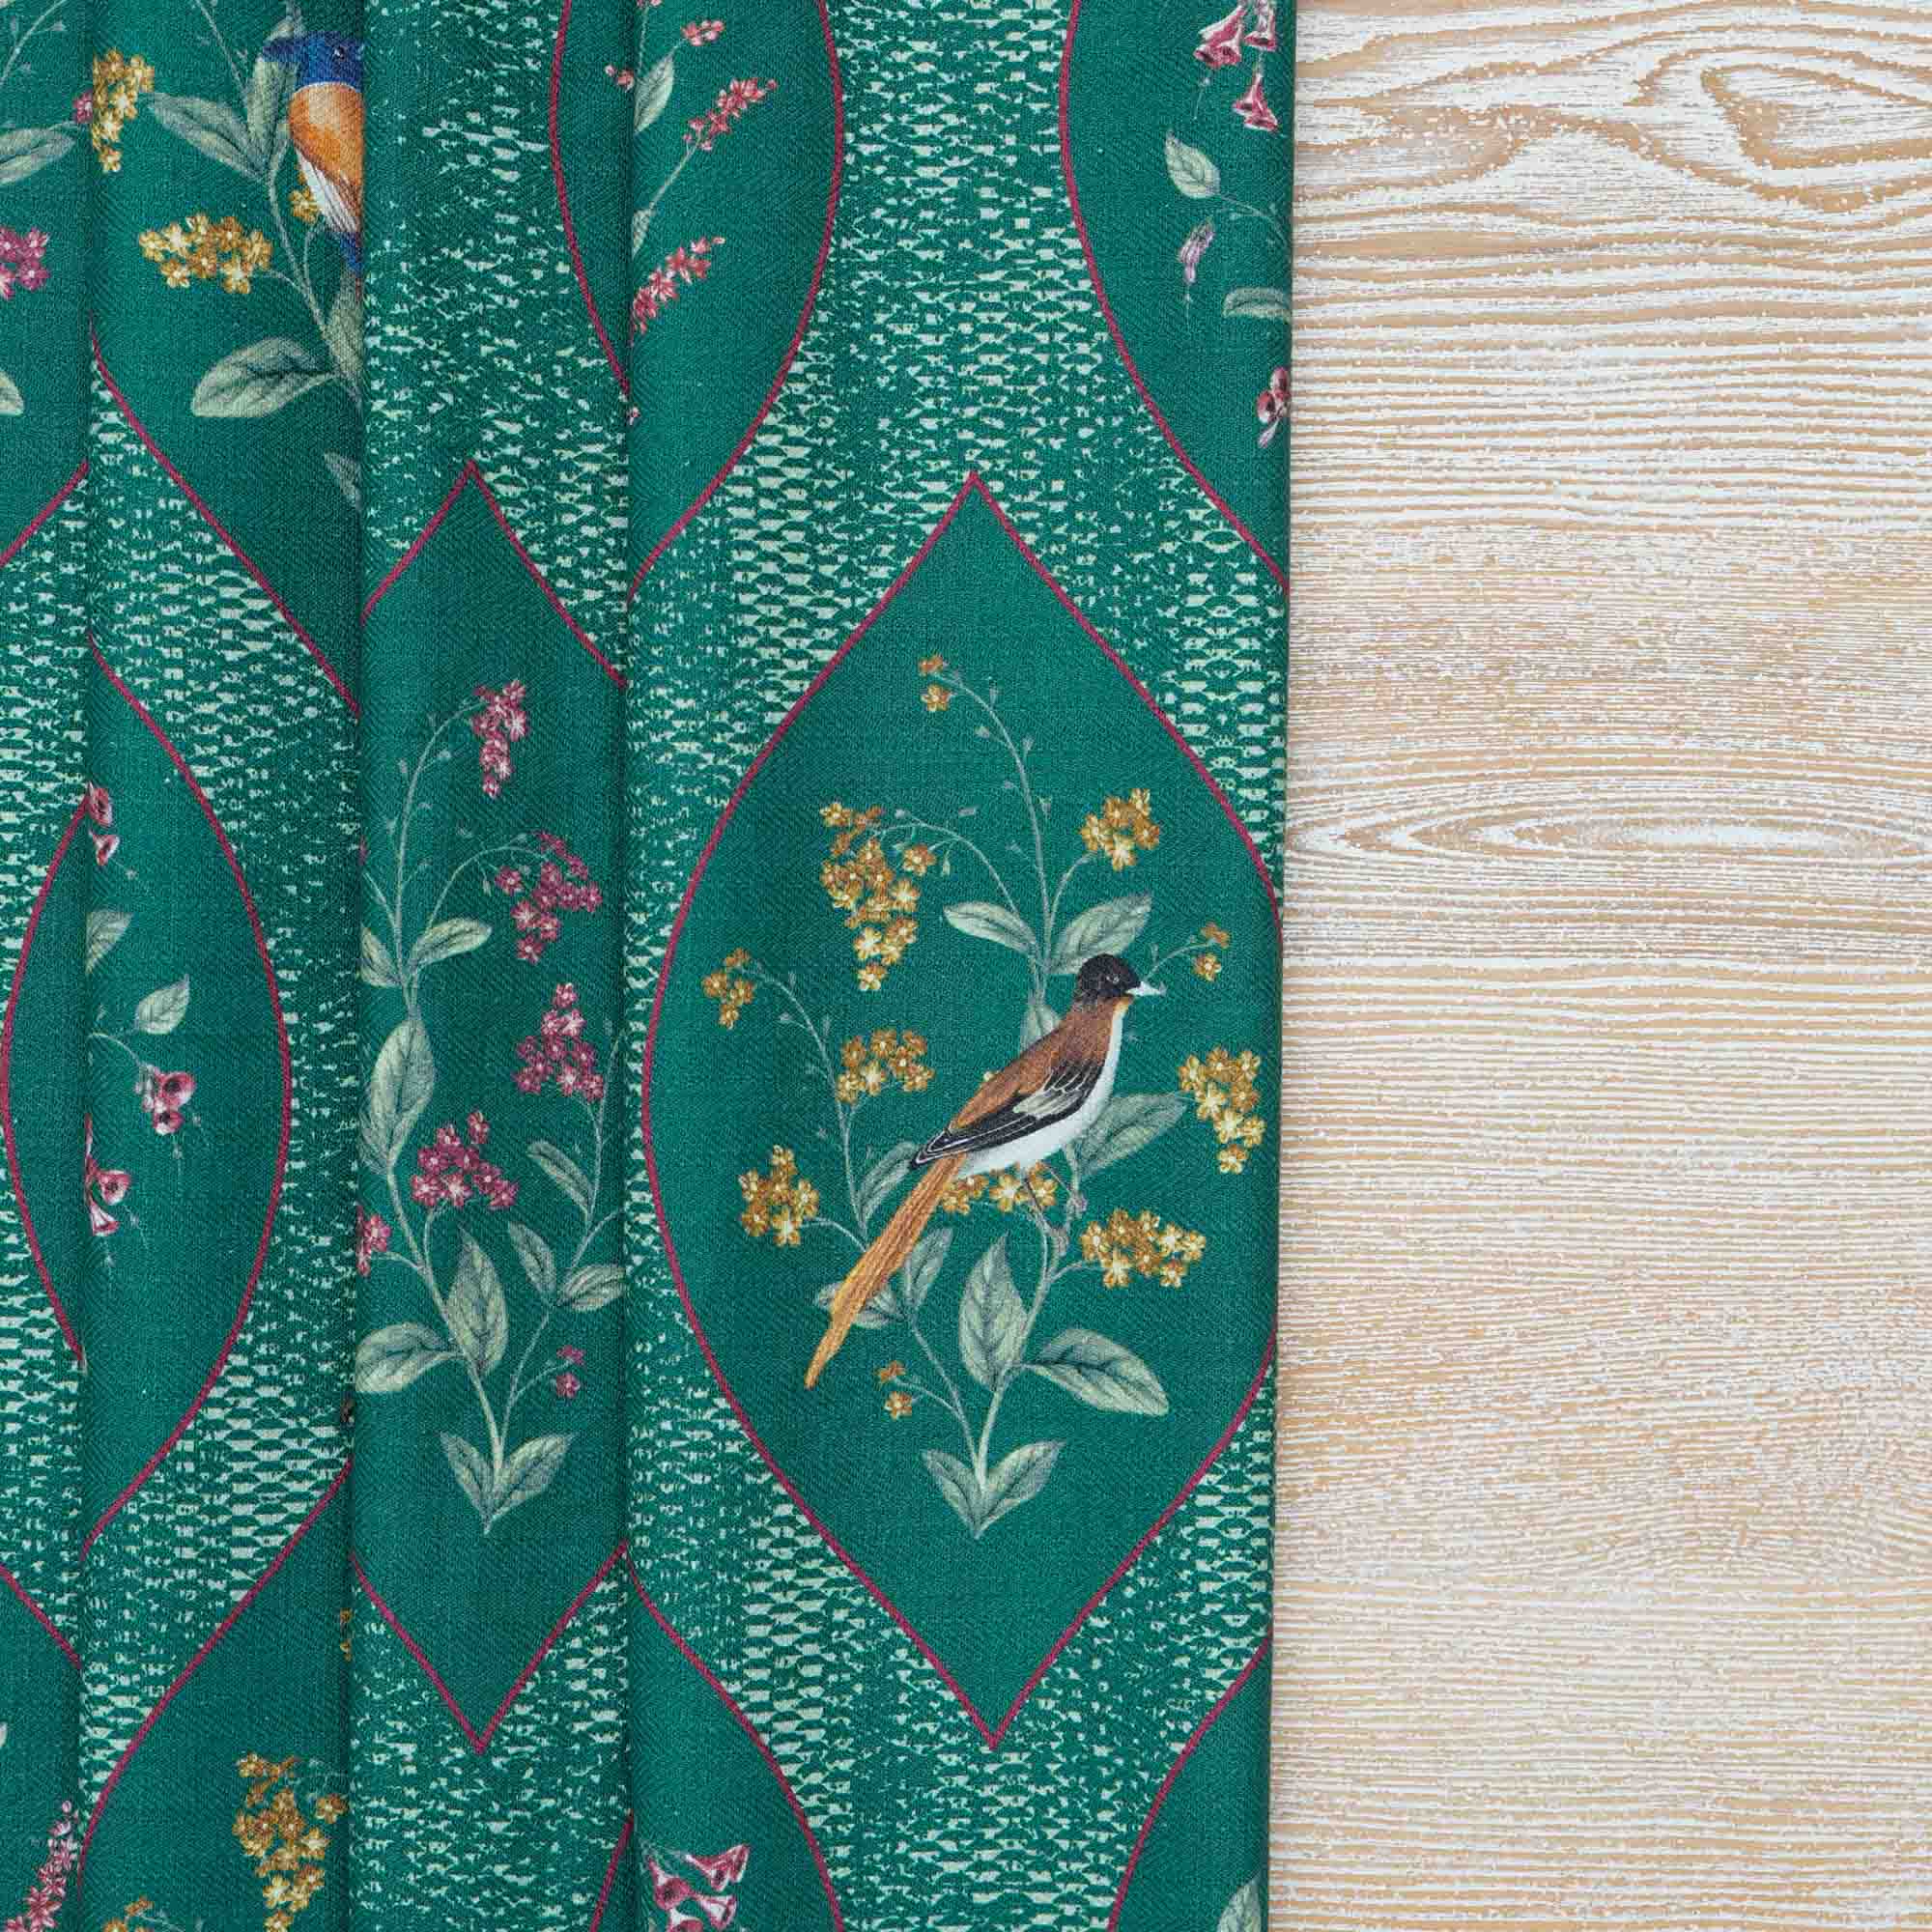 A Persian Corridor Monsoon Cotton Linen Blend Fabric (Horizontal Repeat)